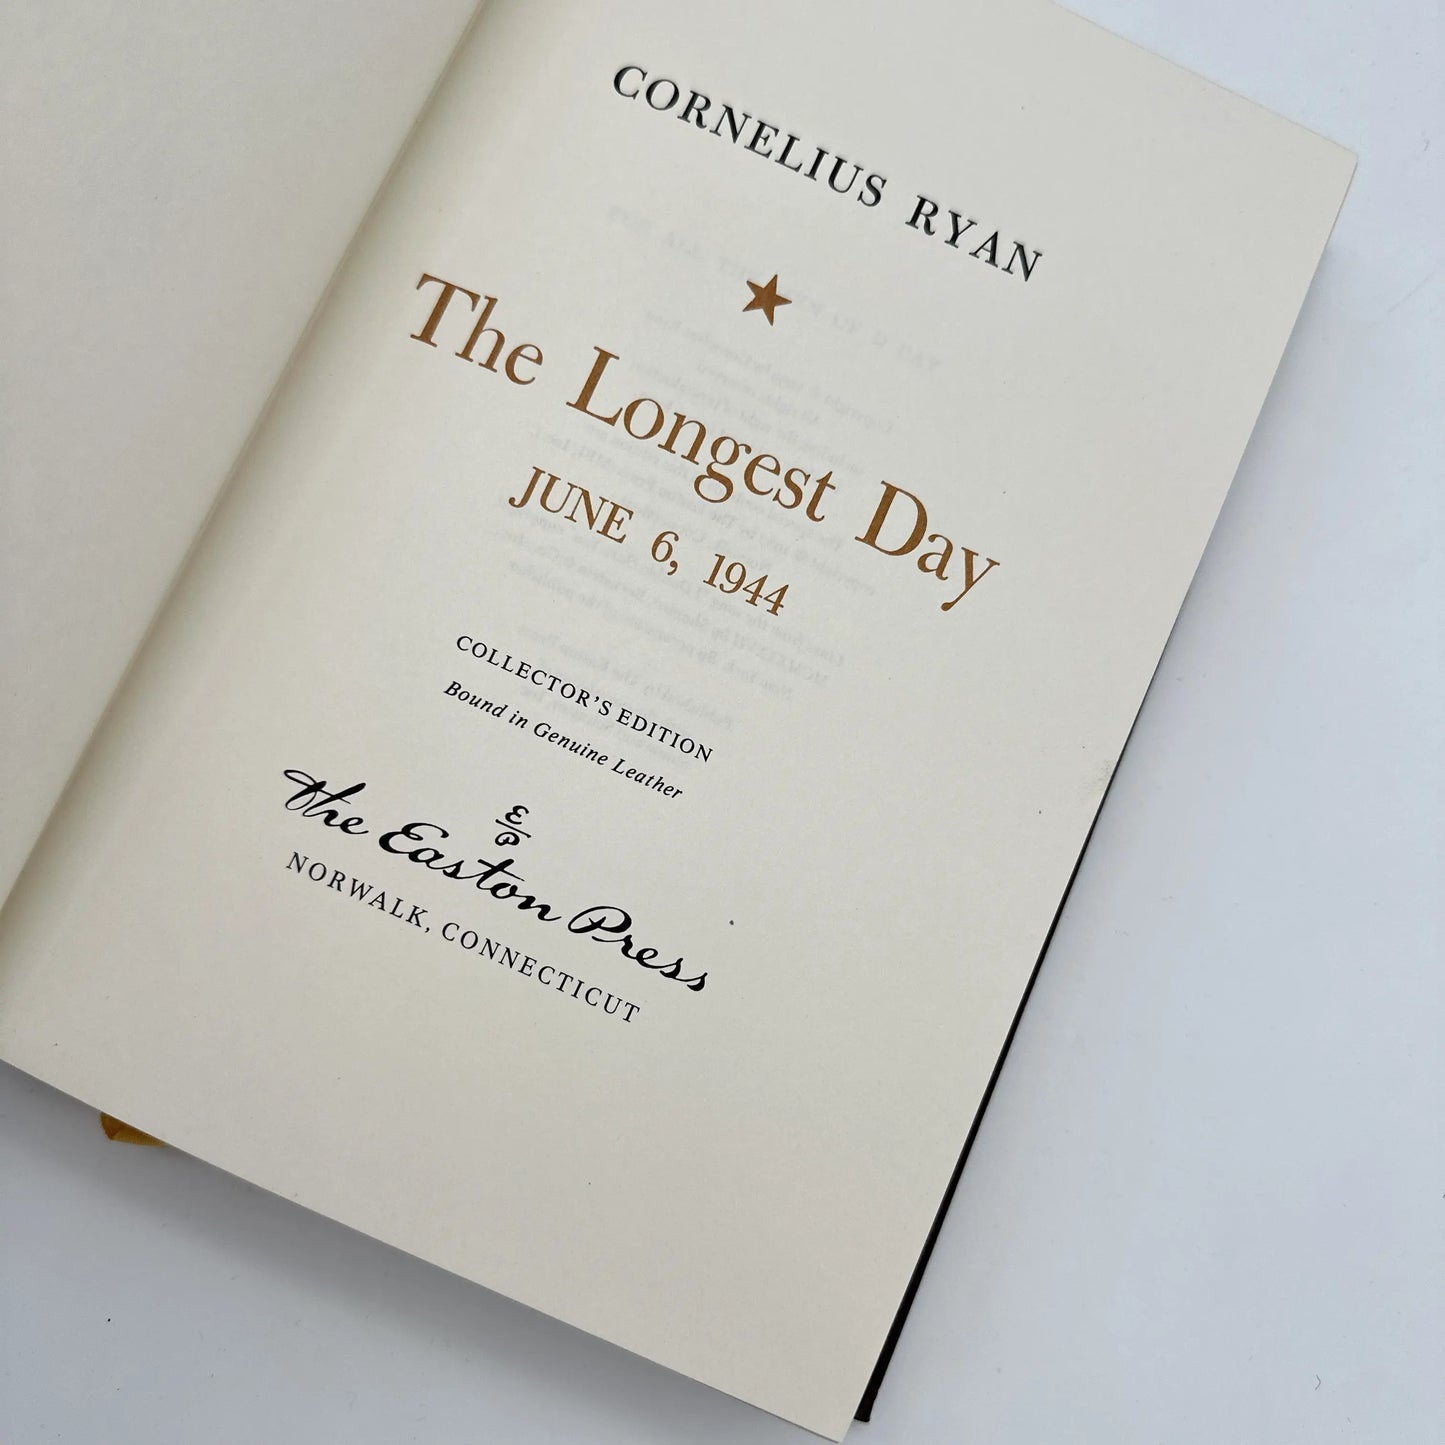 "The Longest Day: June 6, 1944" — Cornelius Ryan — Leather-bound, gilt-edged Easton Press edition